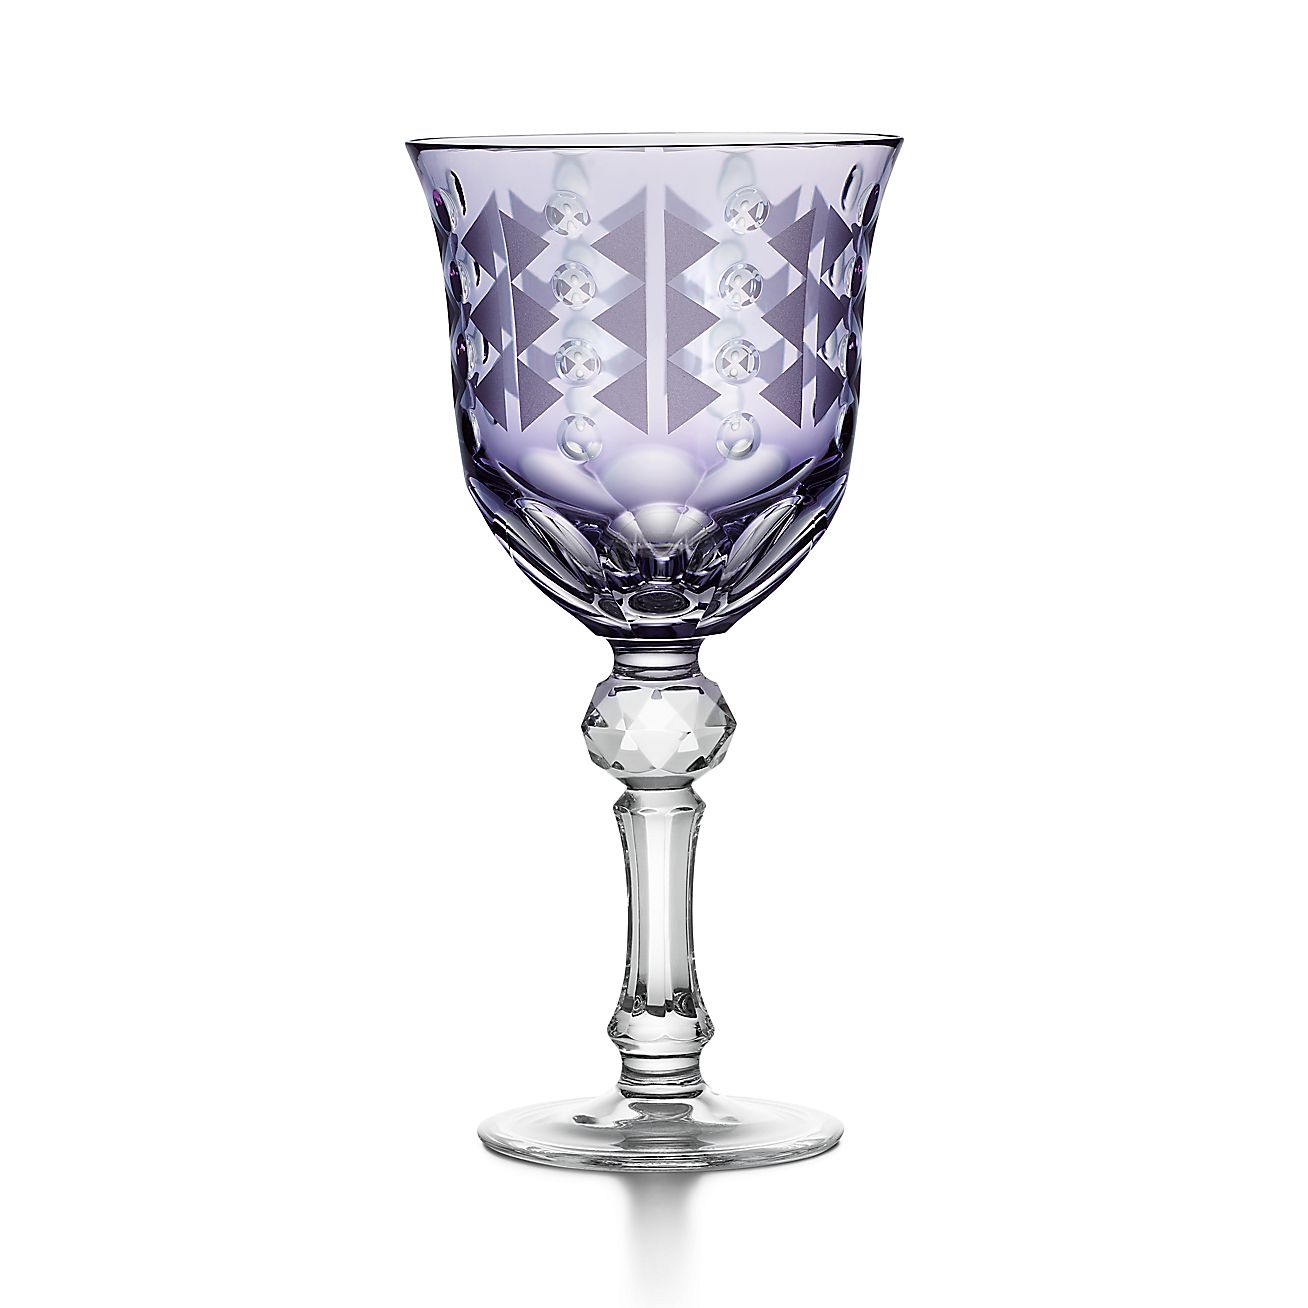 Tiffany Berries Red Wine Glass in Amethyst Purple Lead Crystal, Size: 11.5 in.